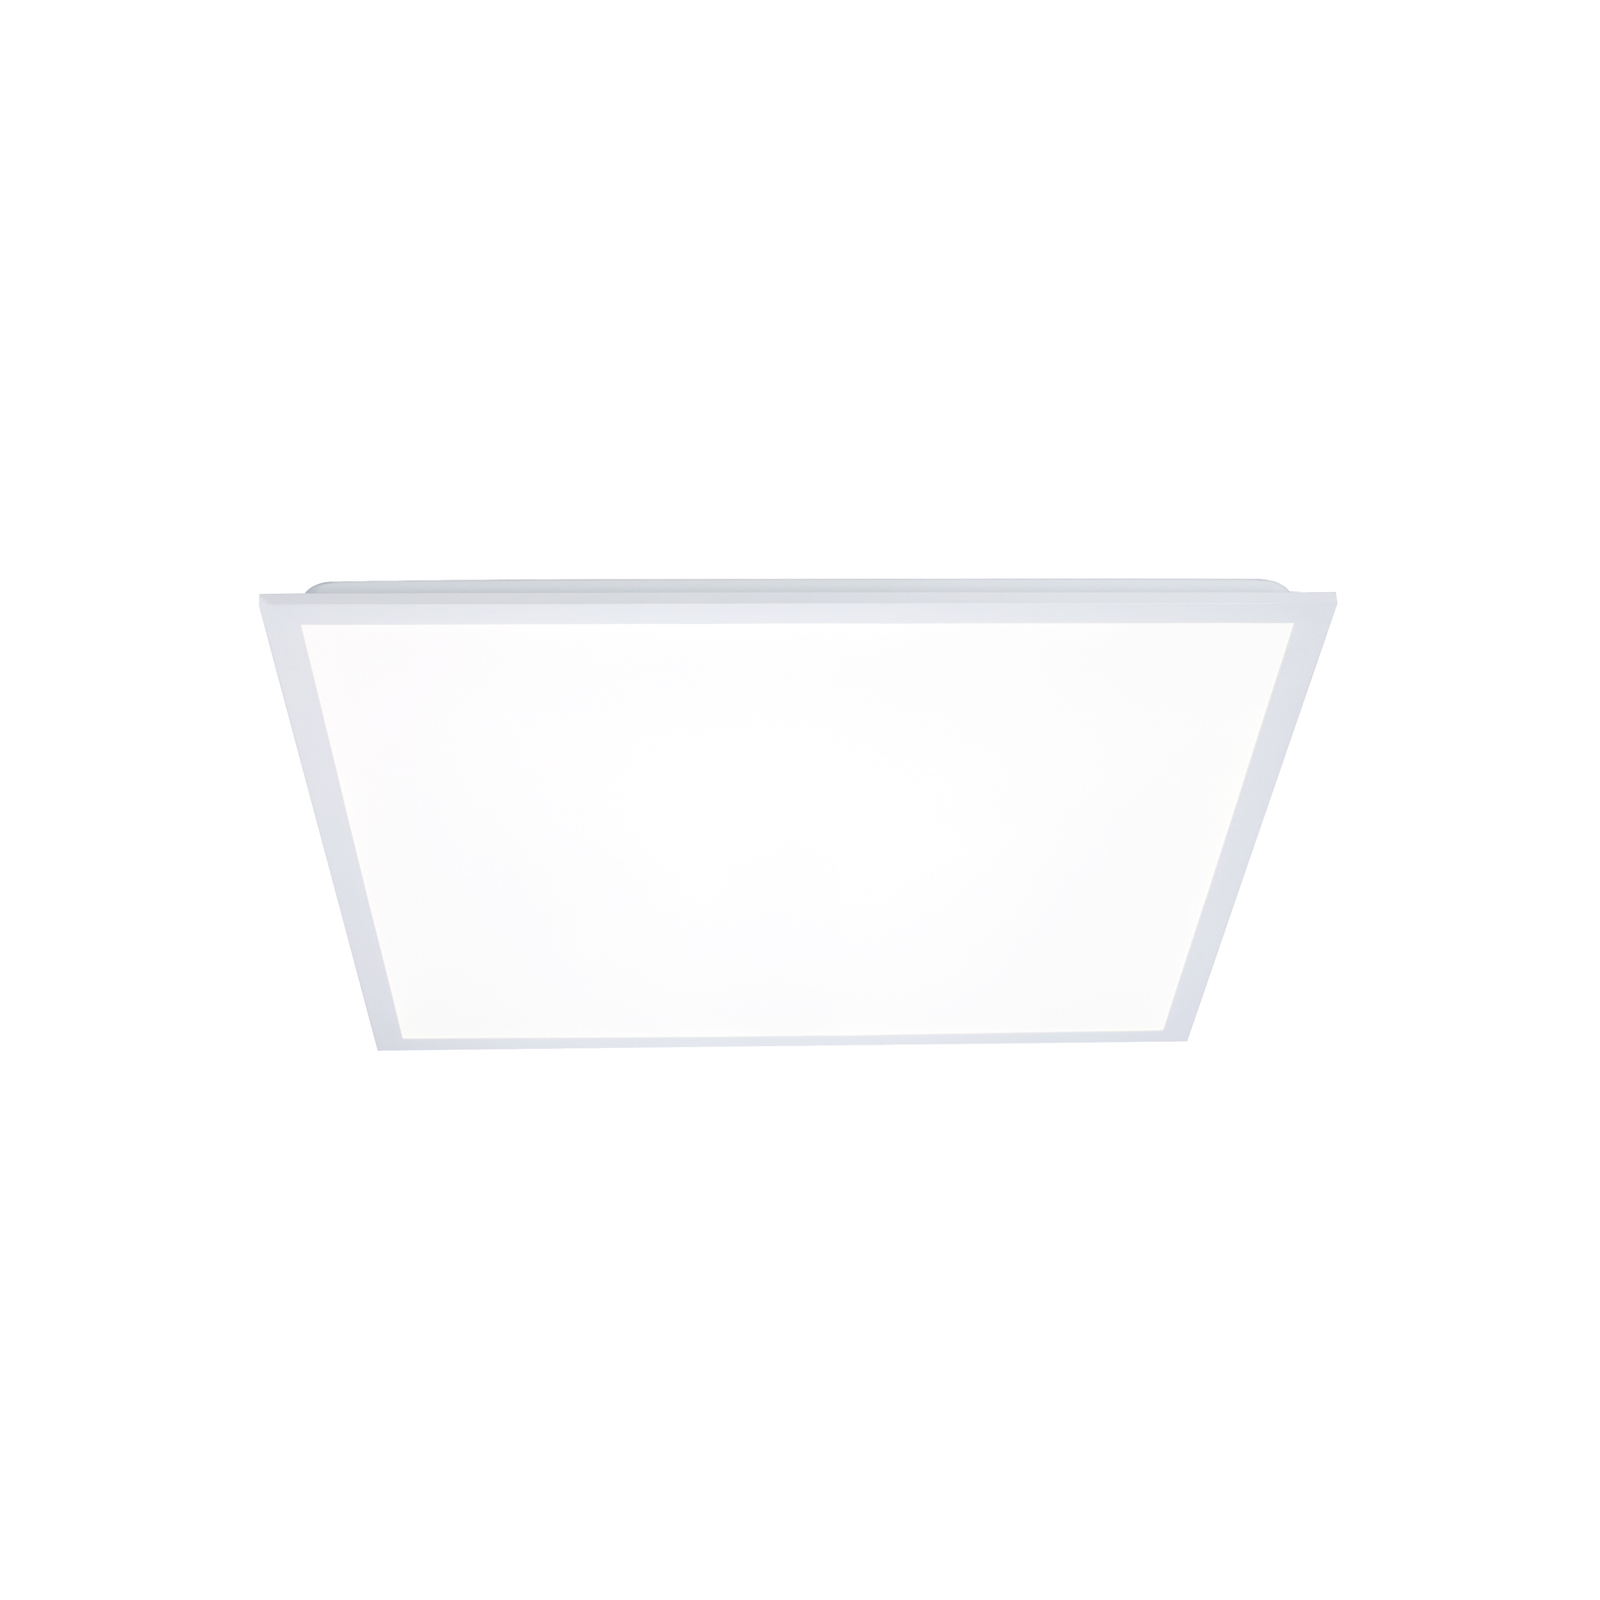 Sylvania LED-panel Start, hvit, 62 x 62 cm, 30 W, UGR19, 830